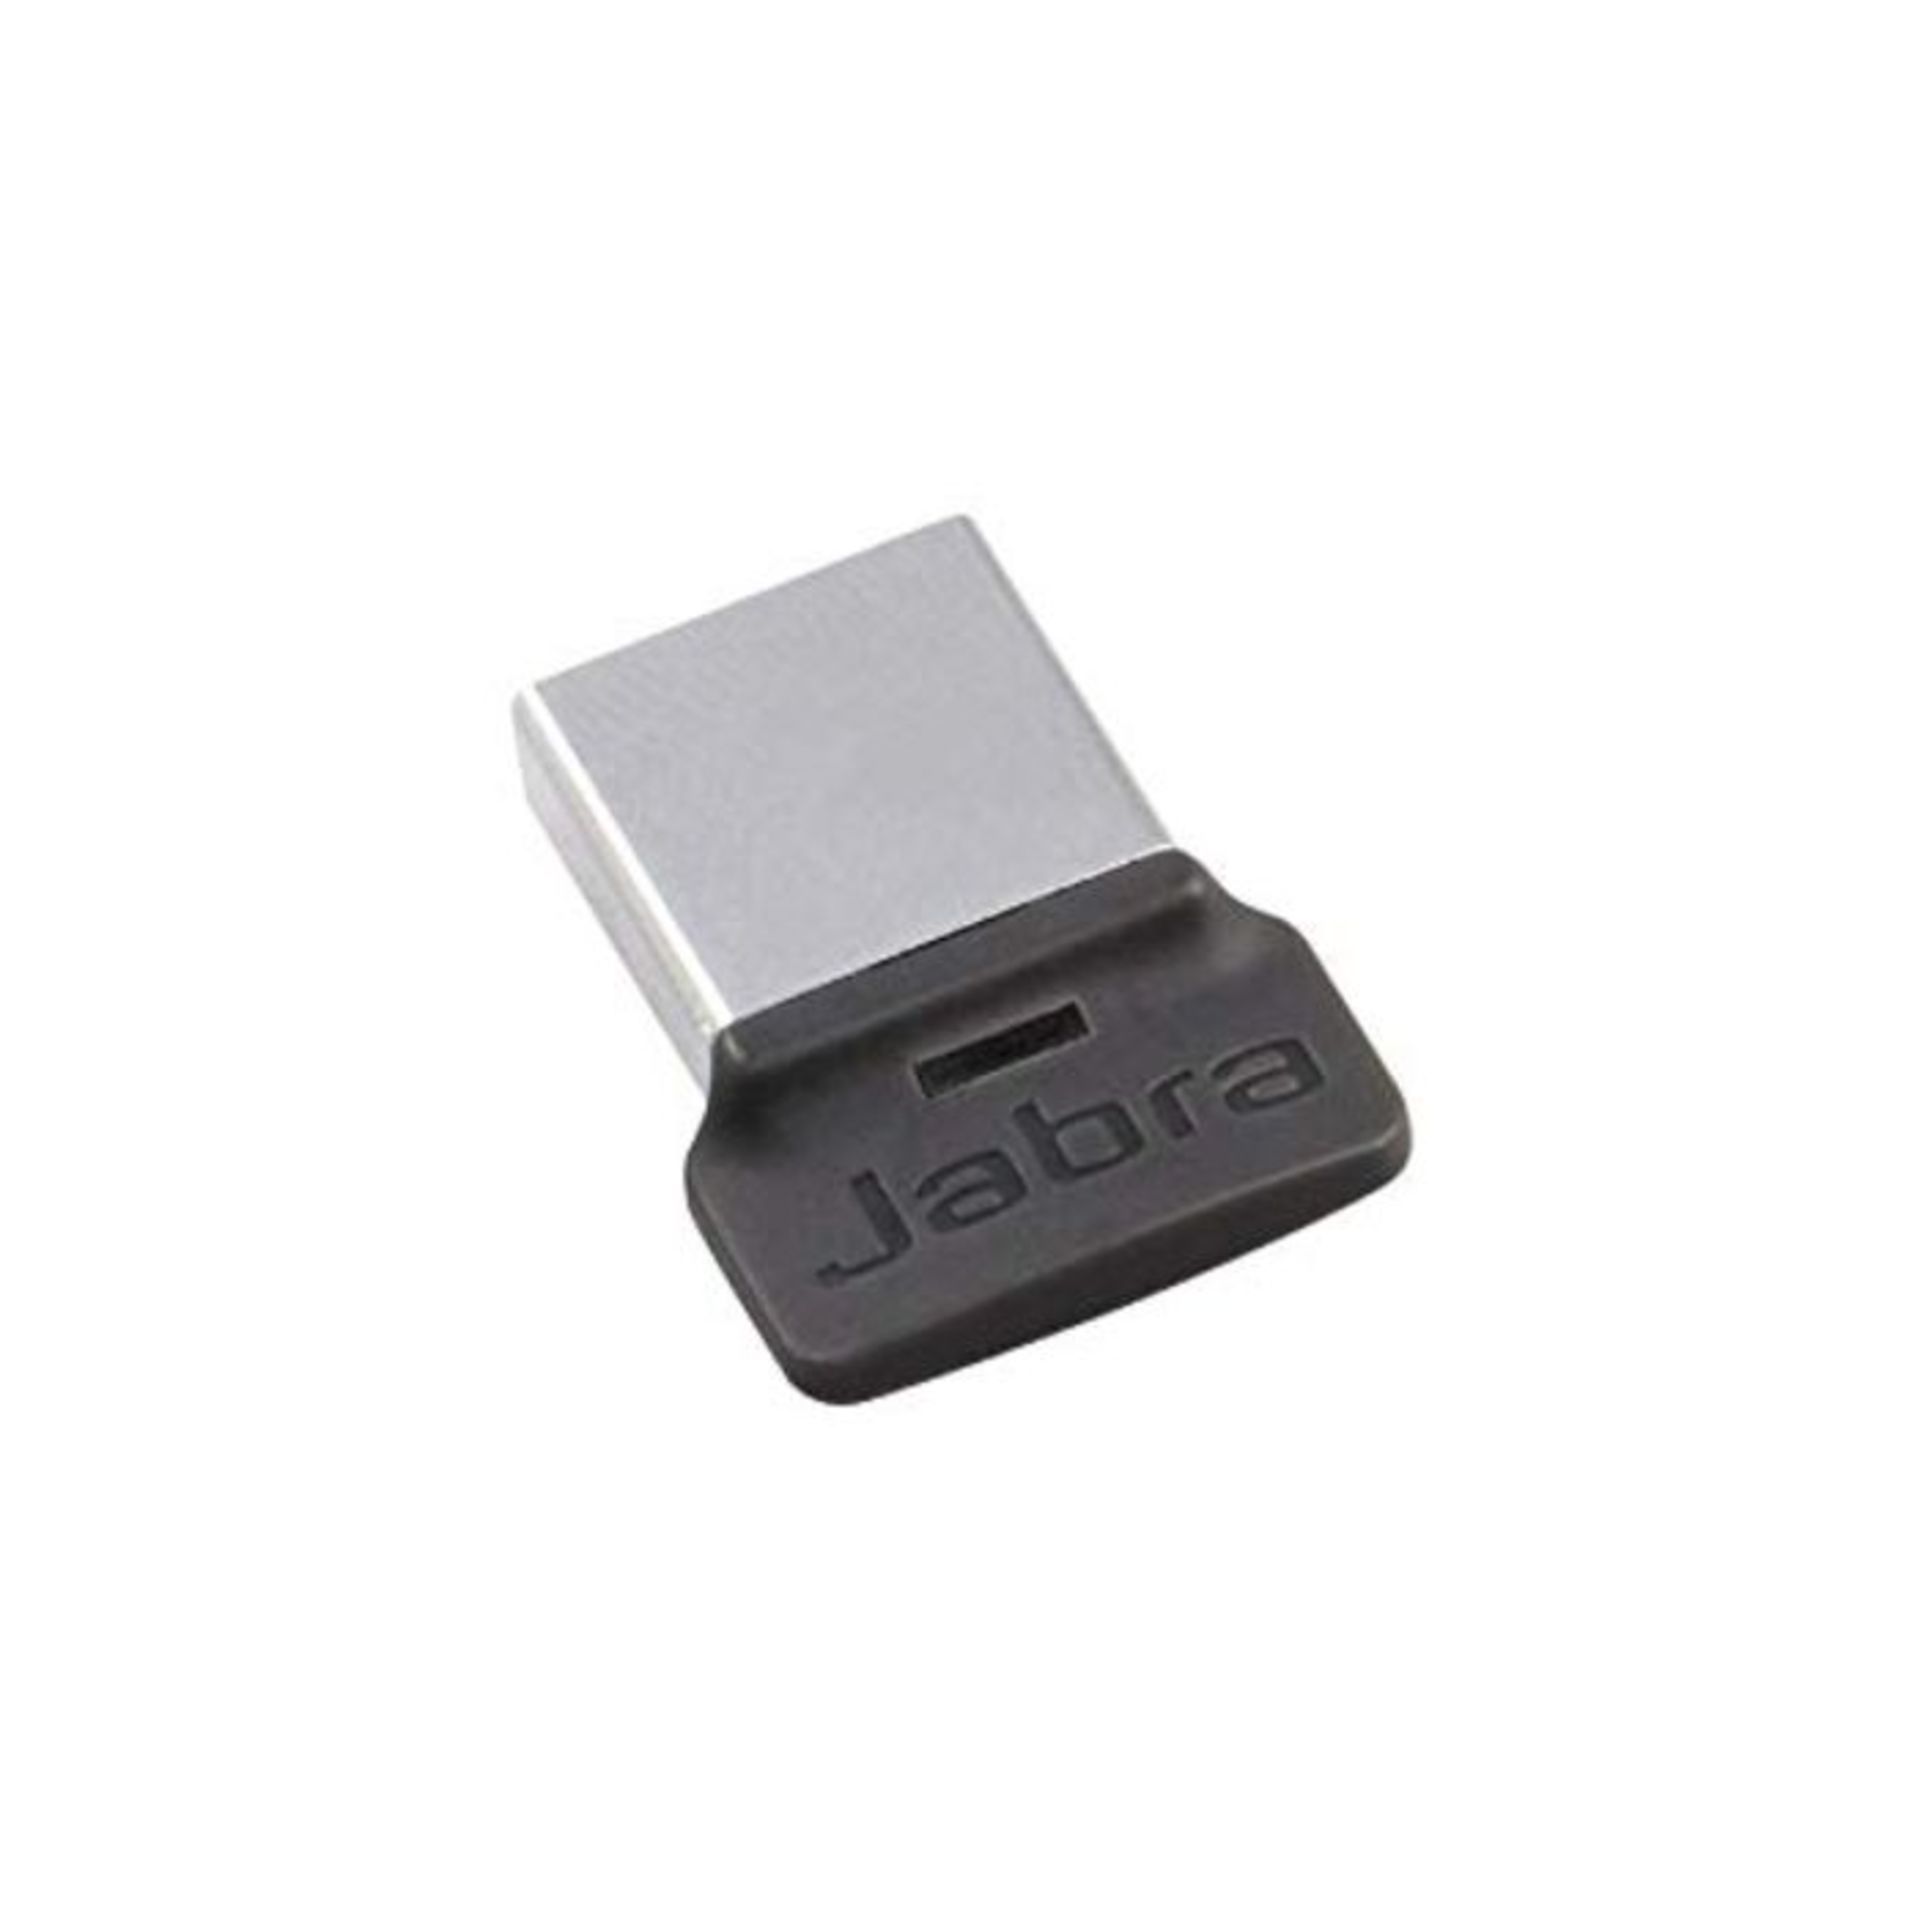 Jabra Link 370 USB A Bluetooth Adapter MS - 30 Meter/98 Feet Wireless Range for Jabra